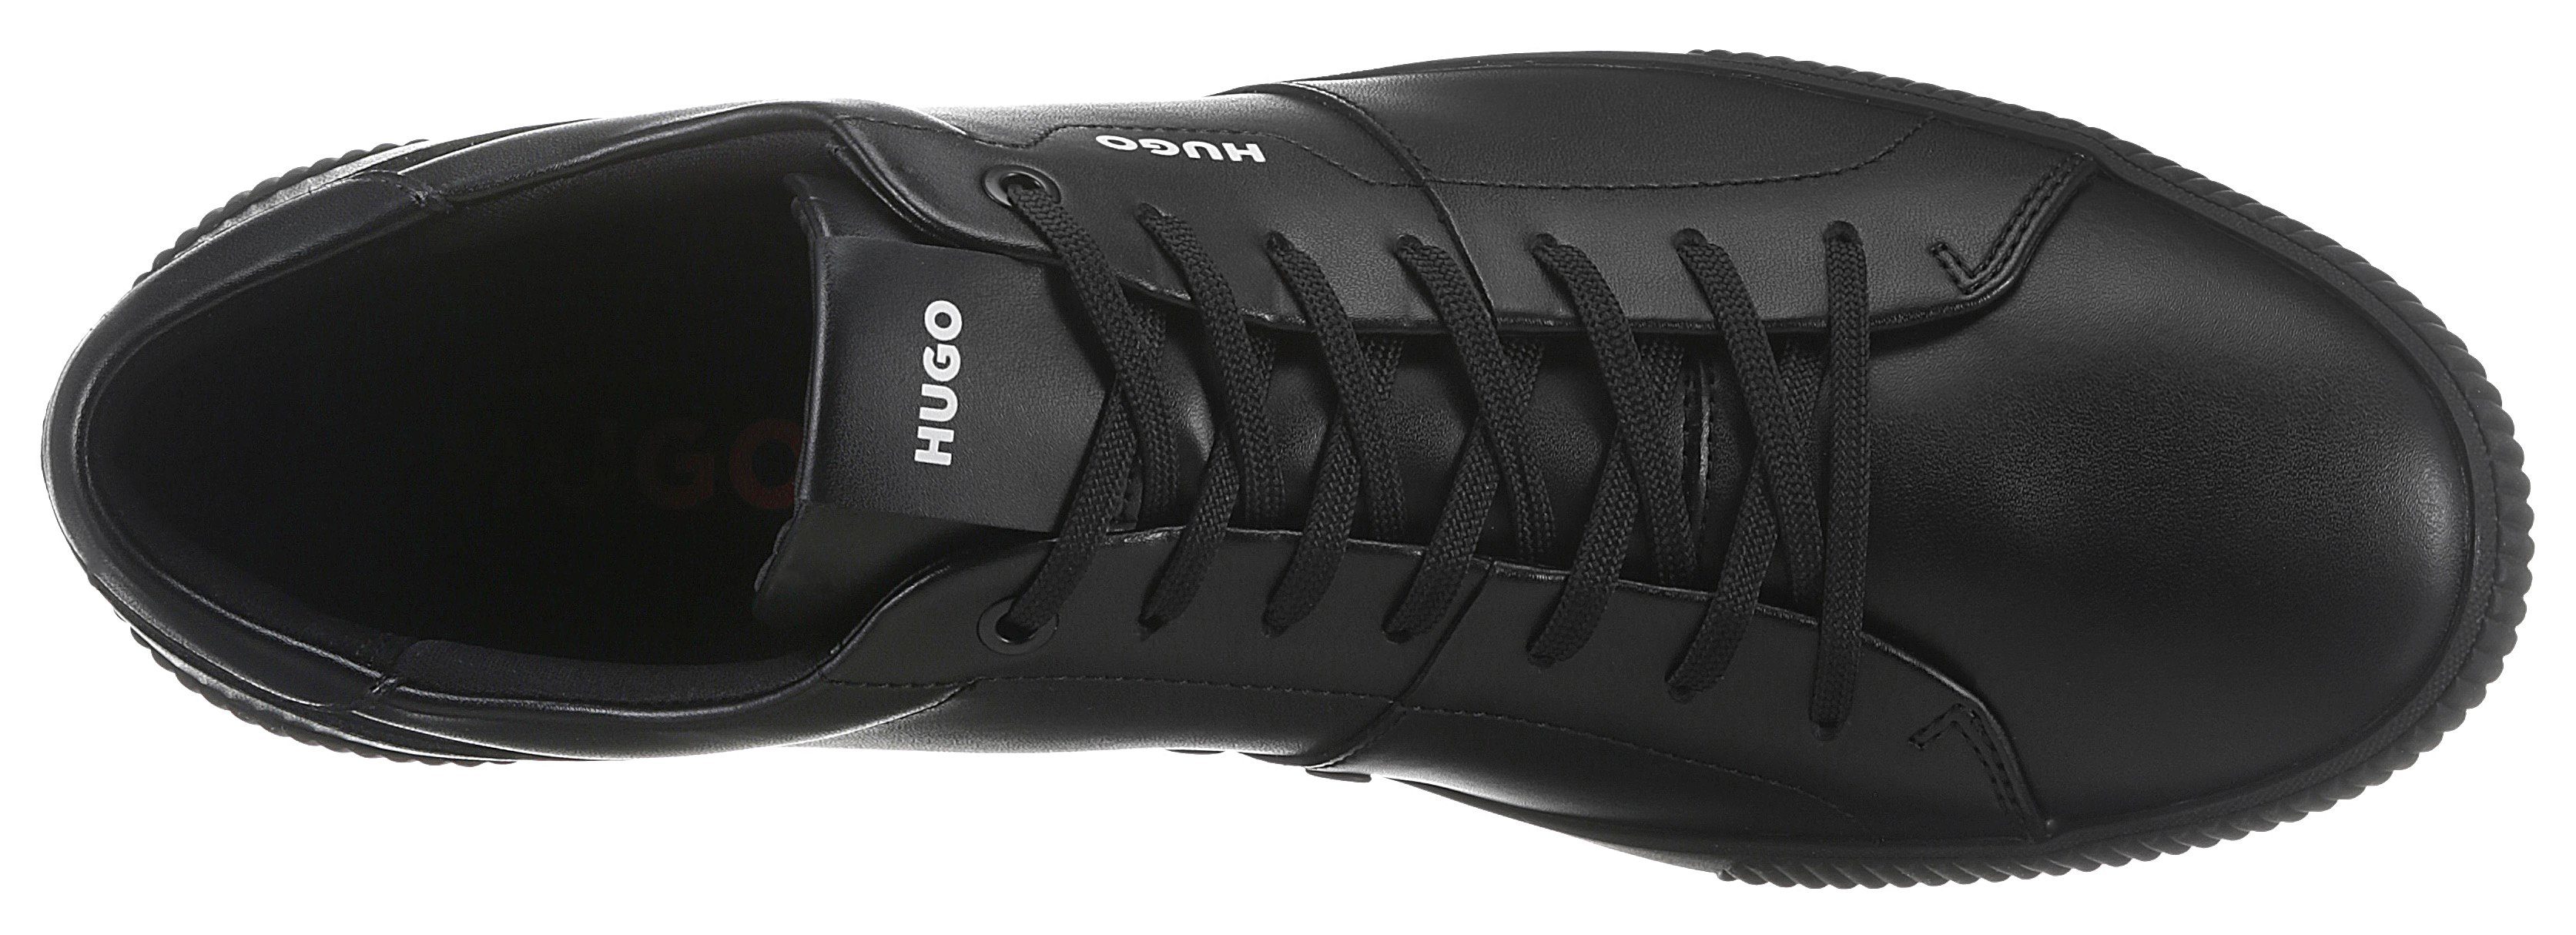 Sneaker Zero_Tenn HUGO in schwarz monochromem Look